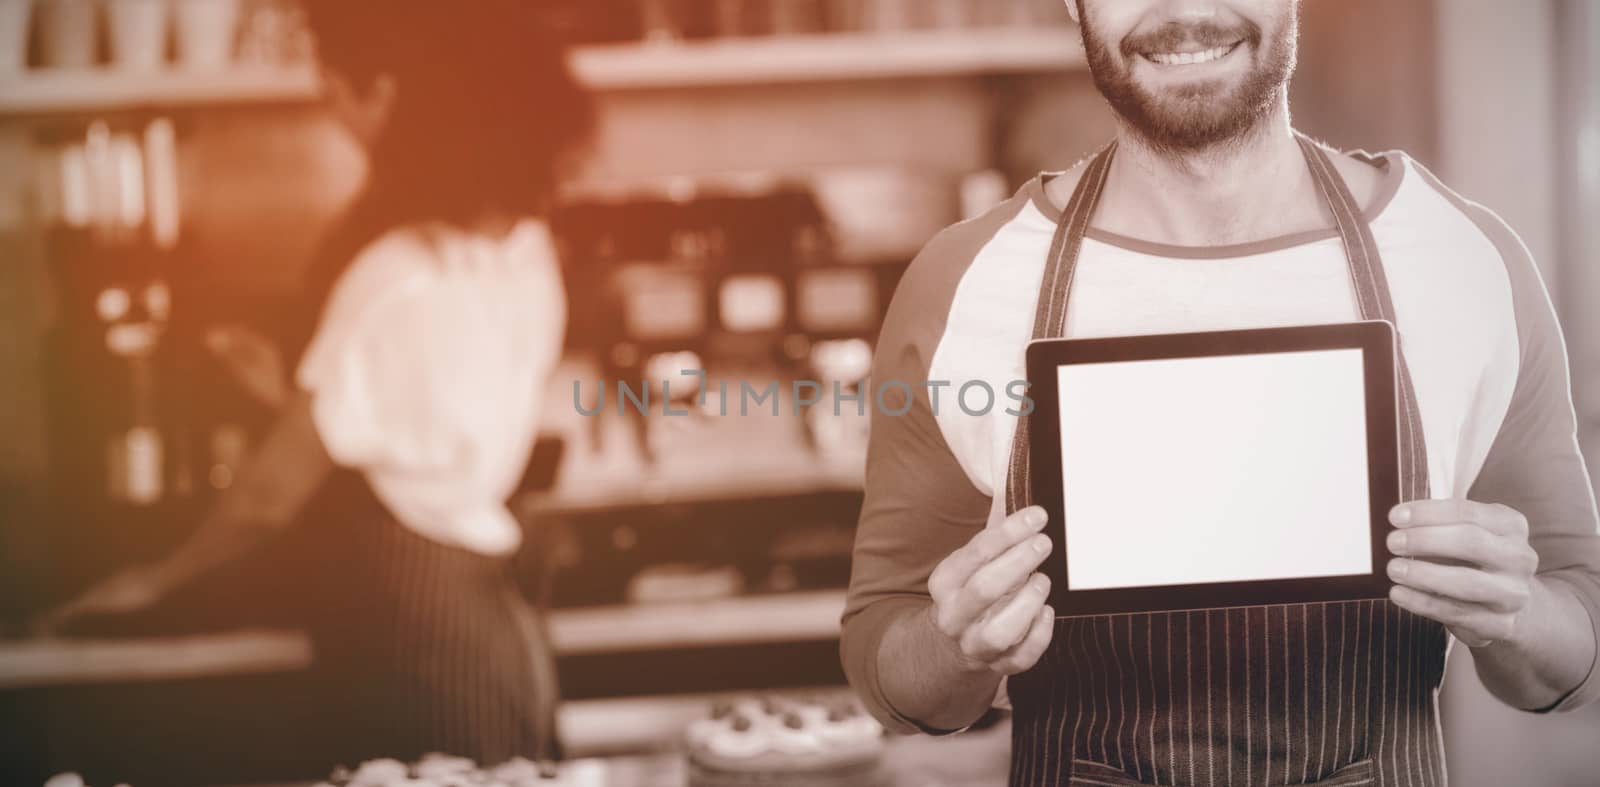 Portrait of smiling waiter showing digital tablet at counter in cafÃ©